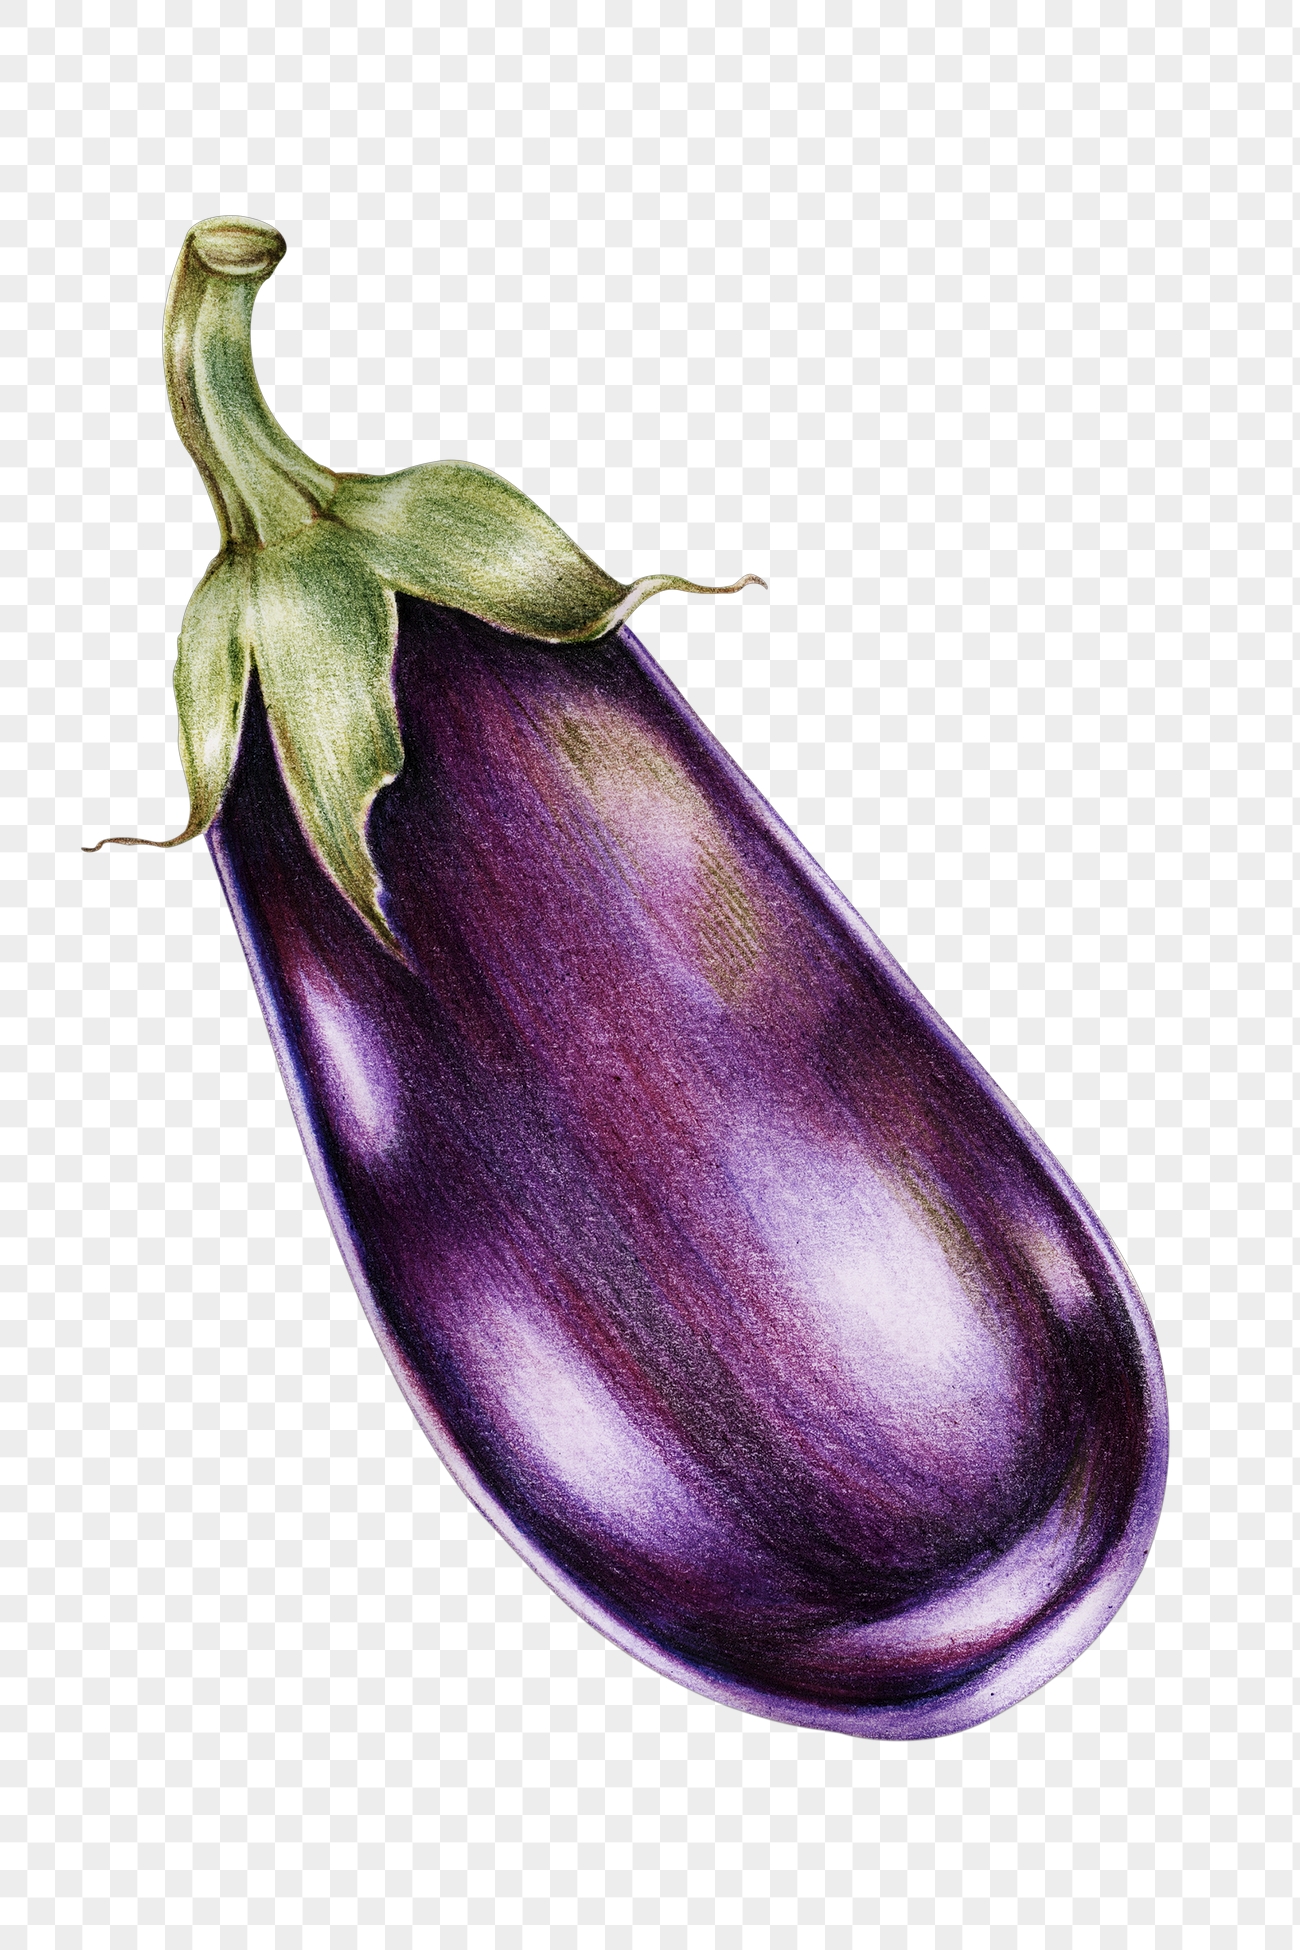 Eggplant PNG Image Wallpaper